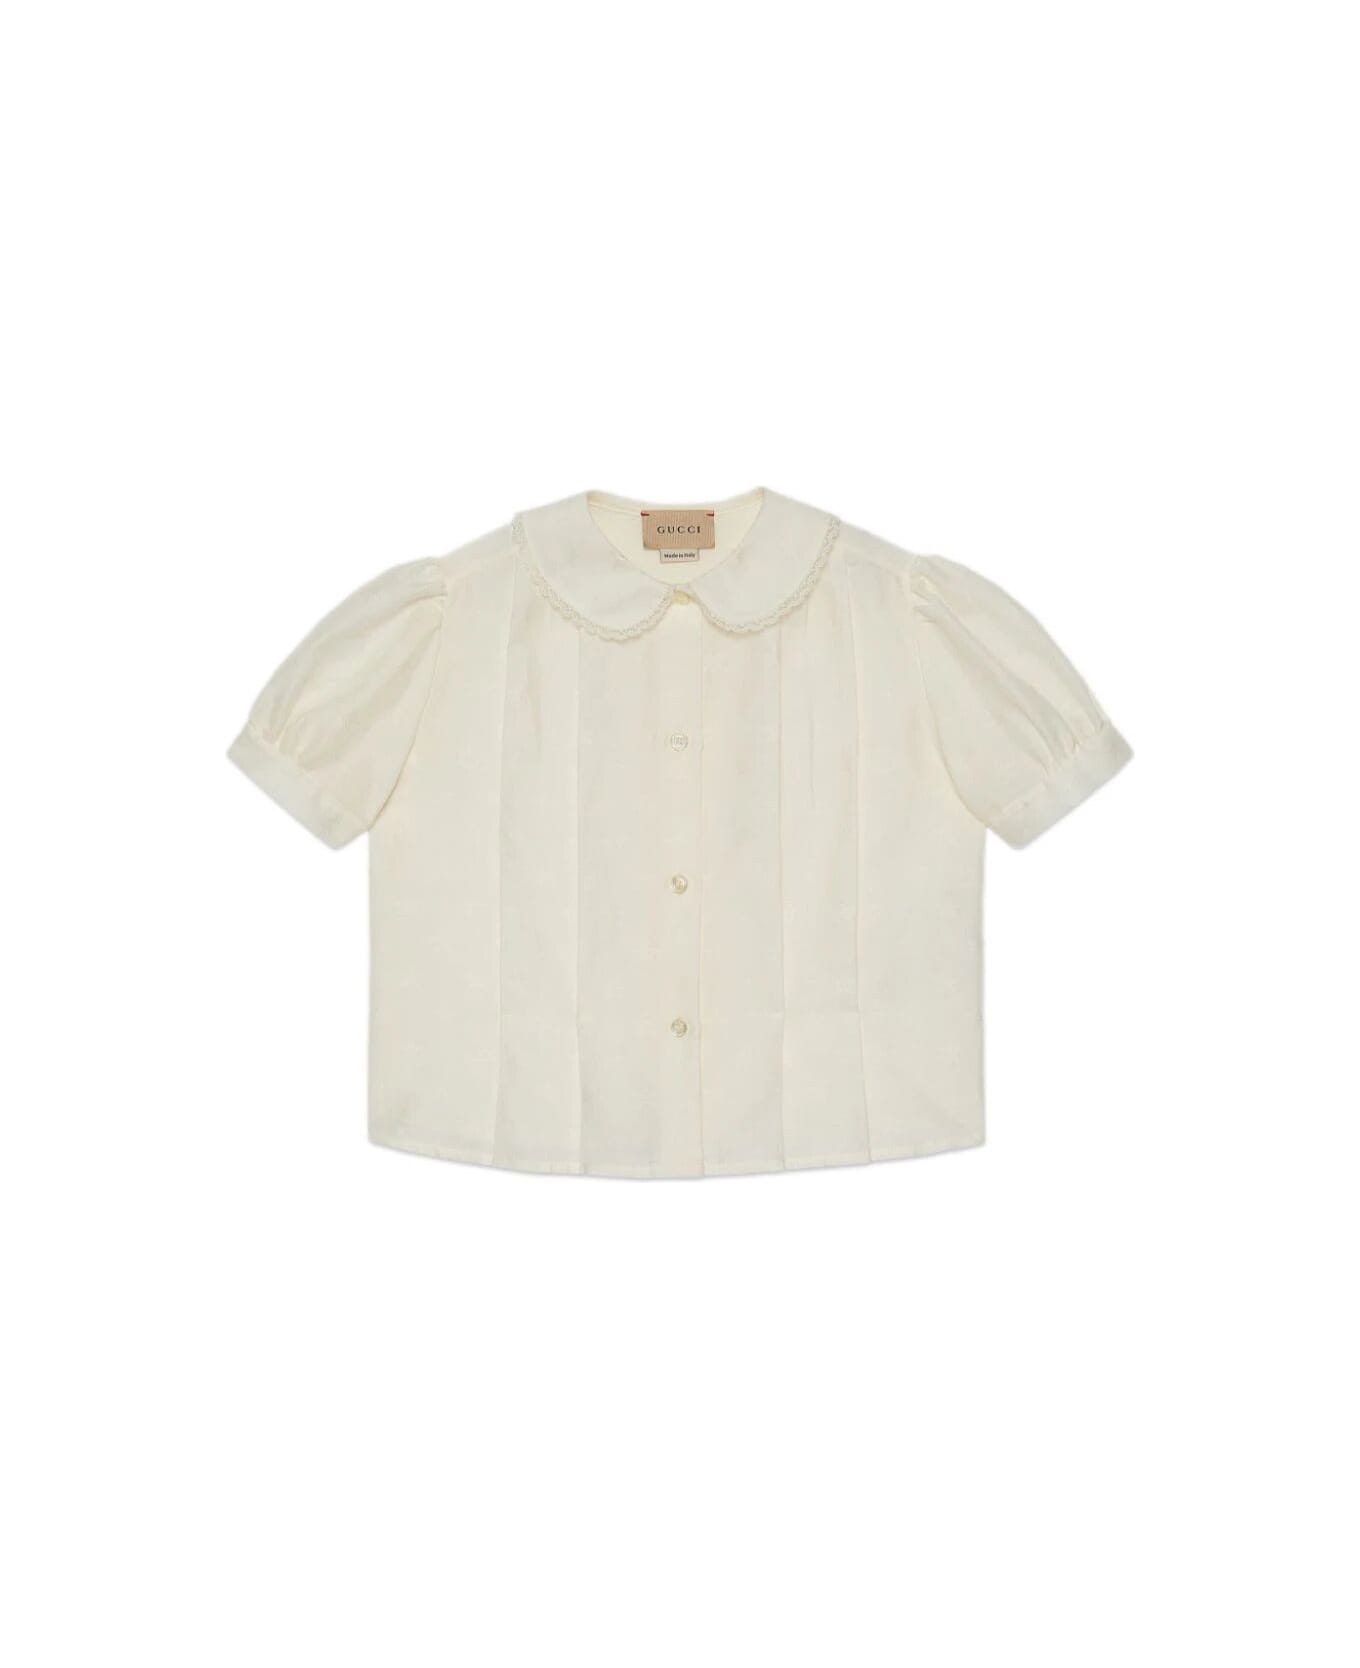 Gucci Shirt Multistar Cotton Jaquard - Ivory